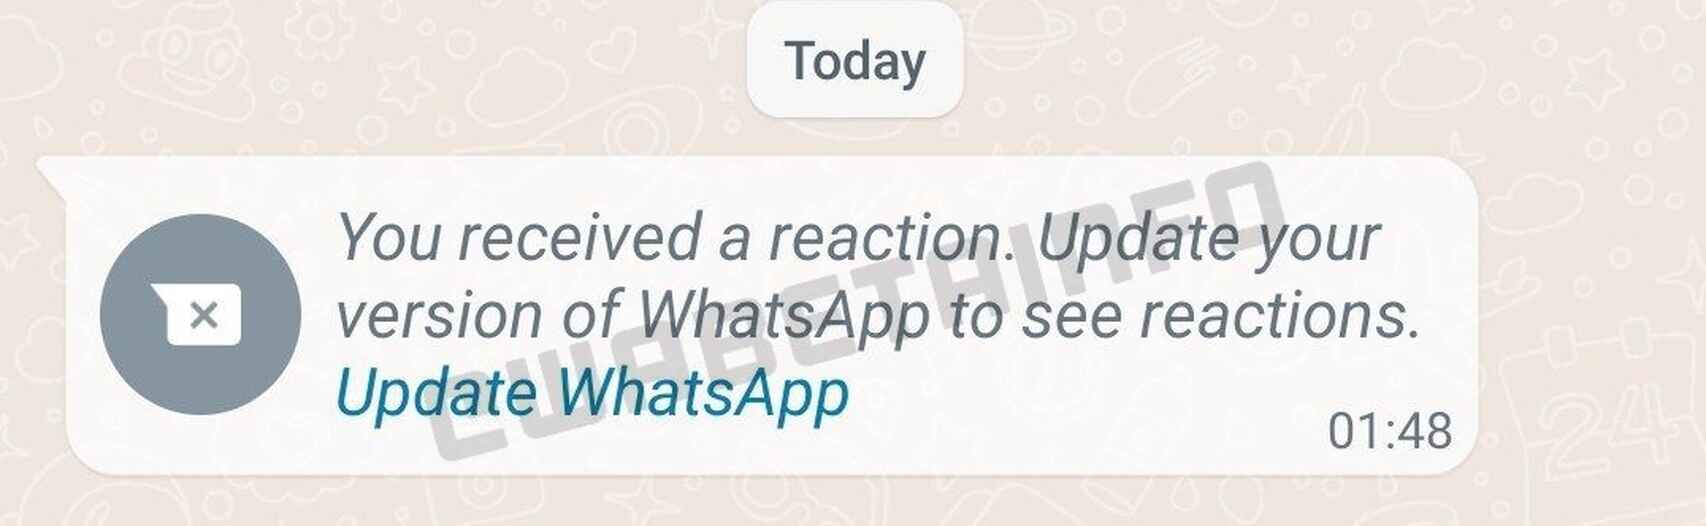 Reacción mensajes WhatsApp